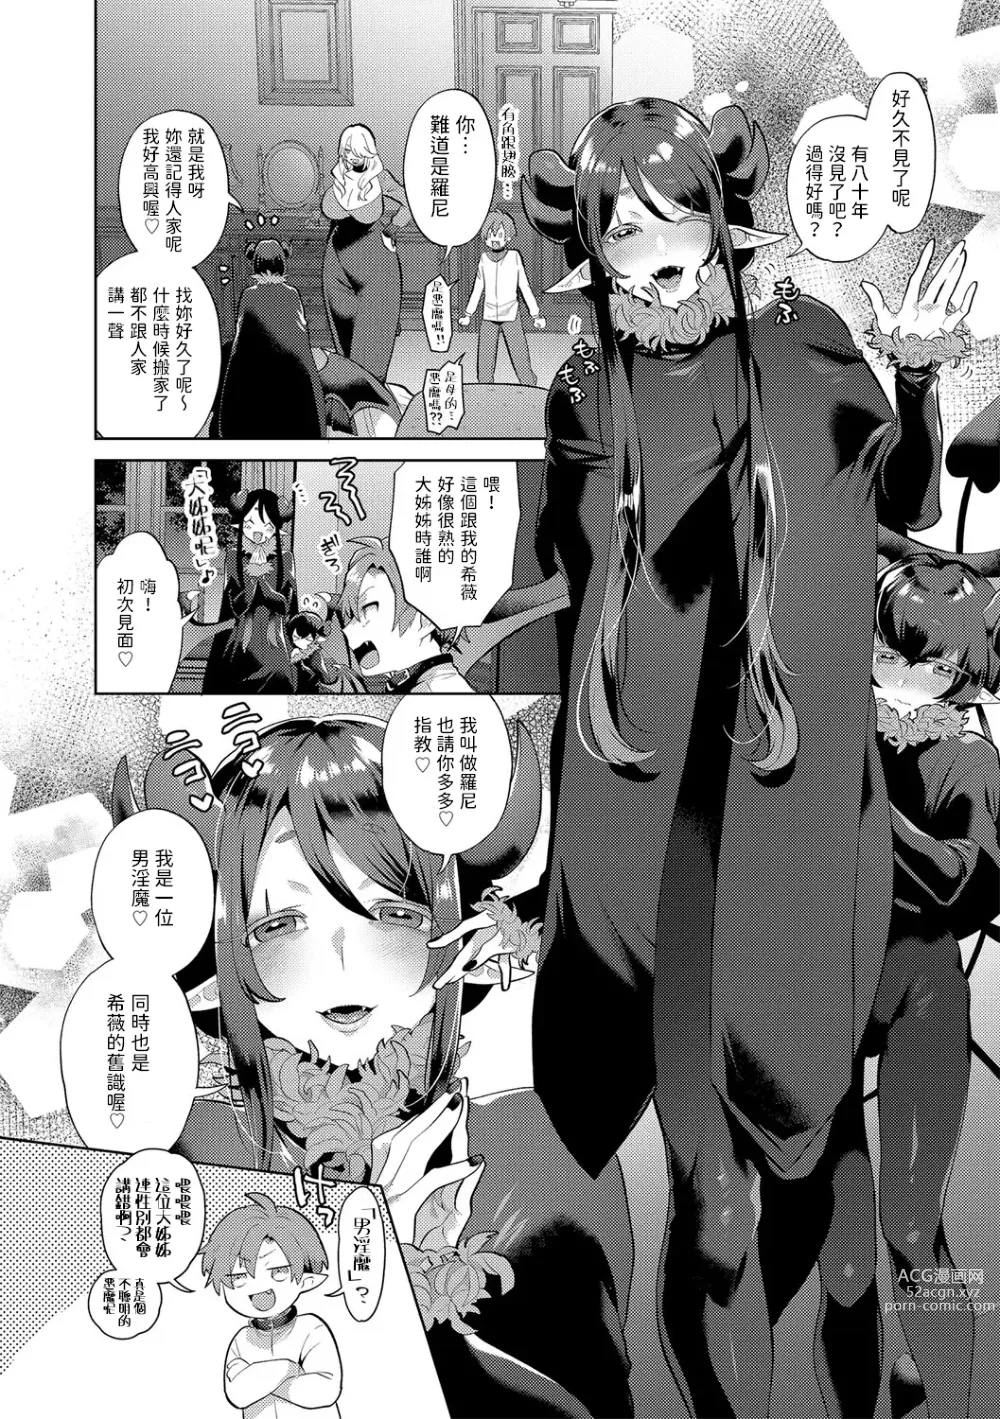 Page 6 of manga Reventlow-jou no Joukou Jikenbo Ch. 2